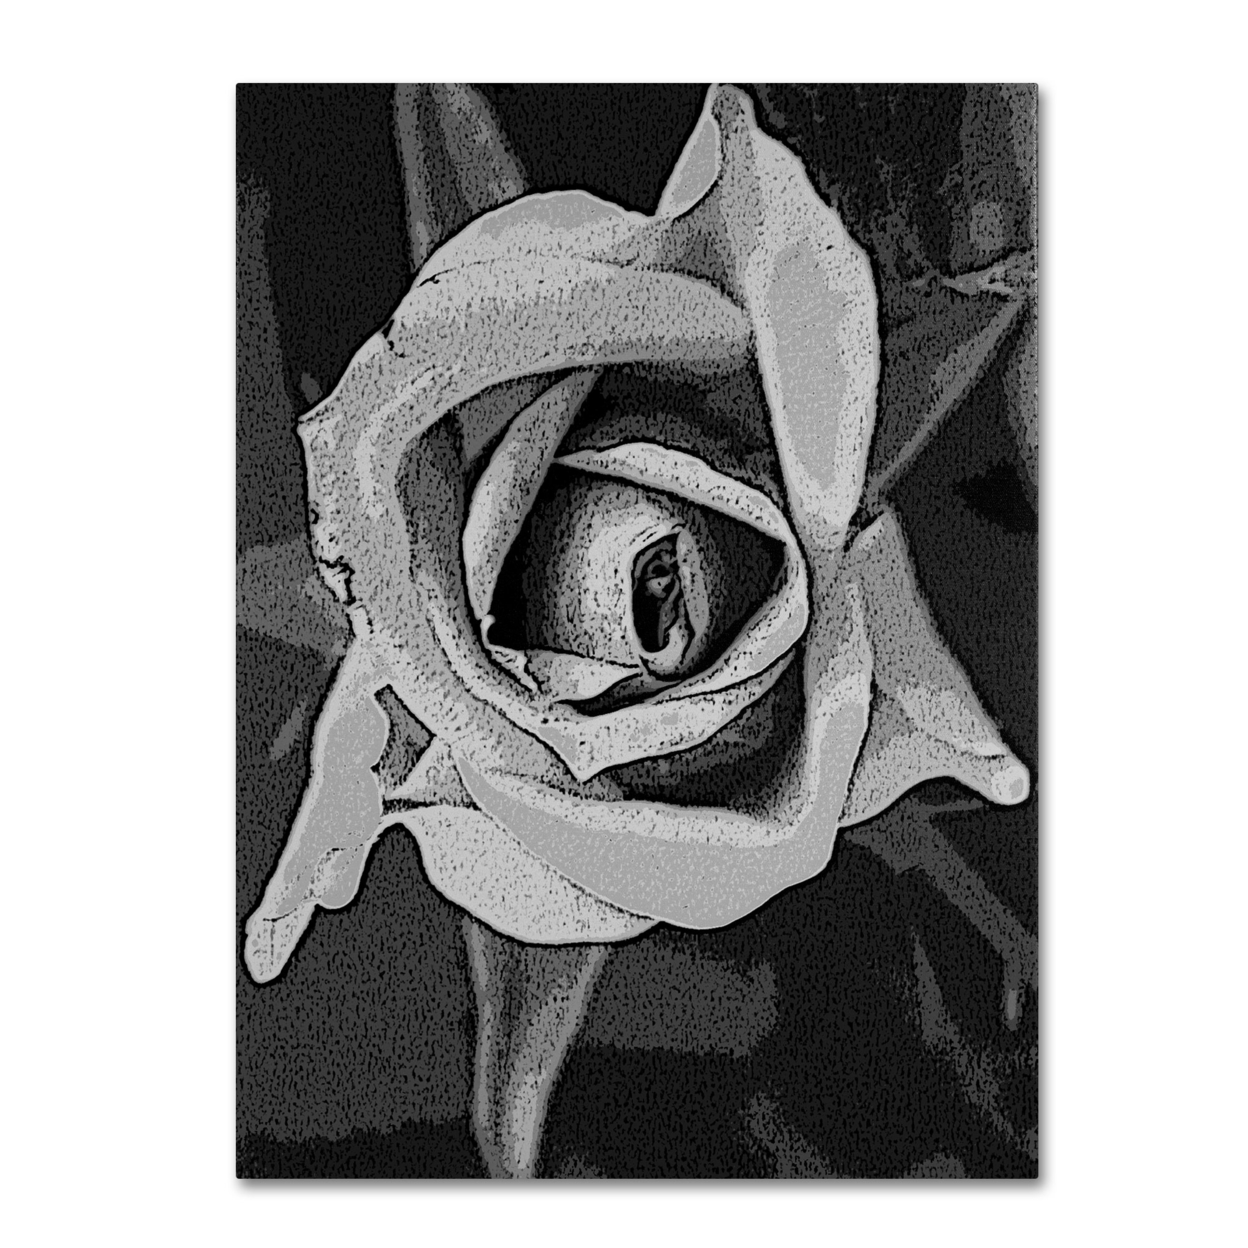 Patty Tuggle 'Black & White Rose' Canvas Wall Art 35 X 47